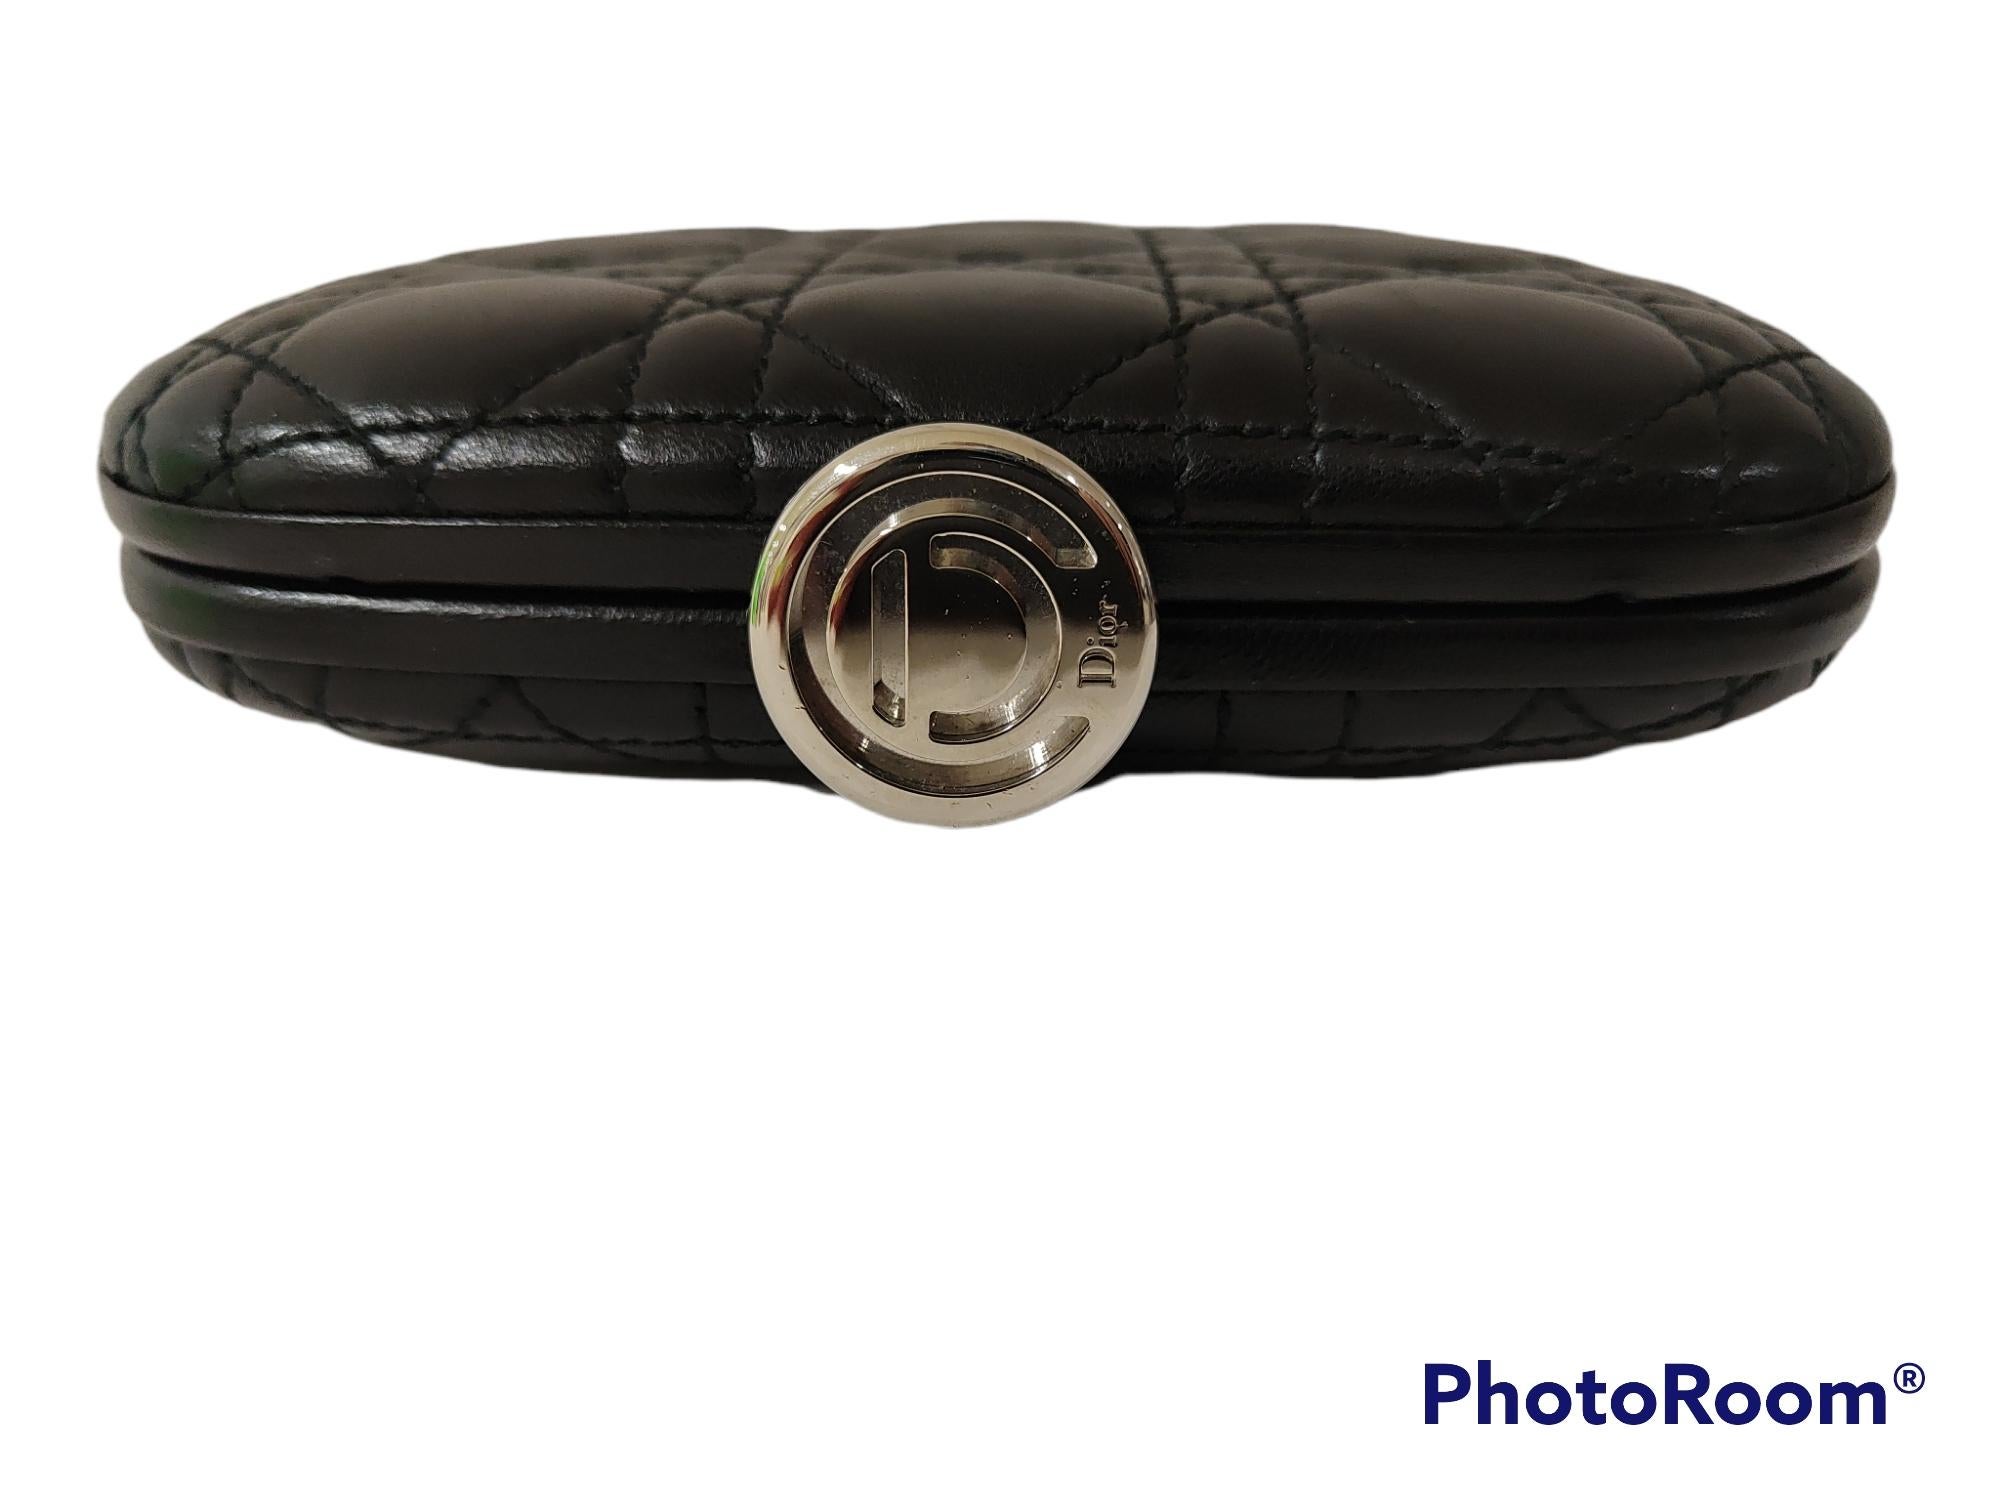 Christian Dior black leather cannage pochette clutch 
measurements: 17*12cm